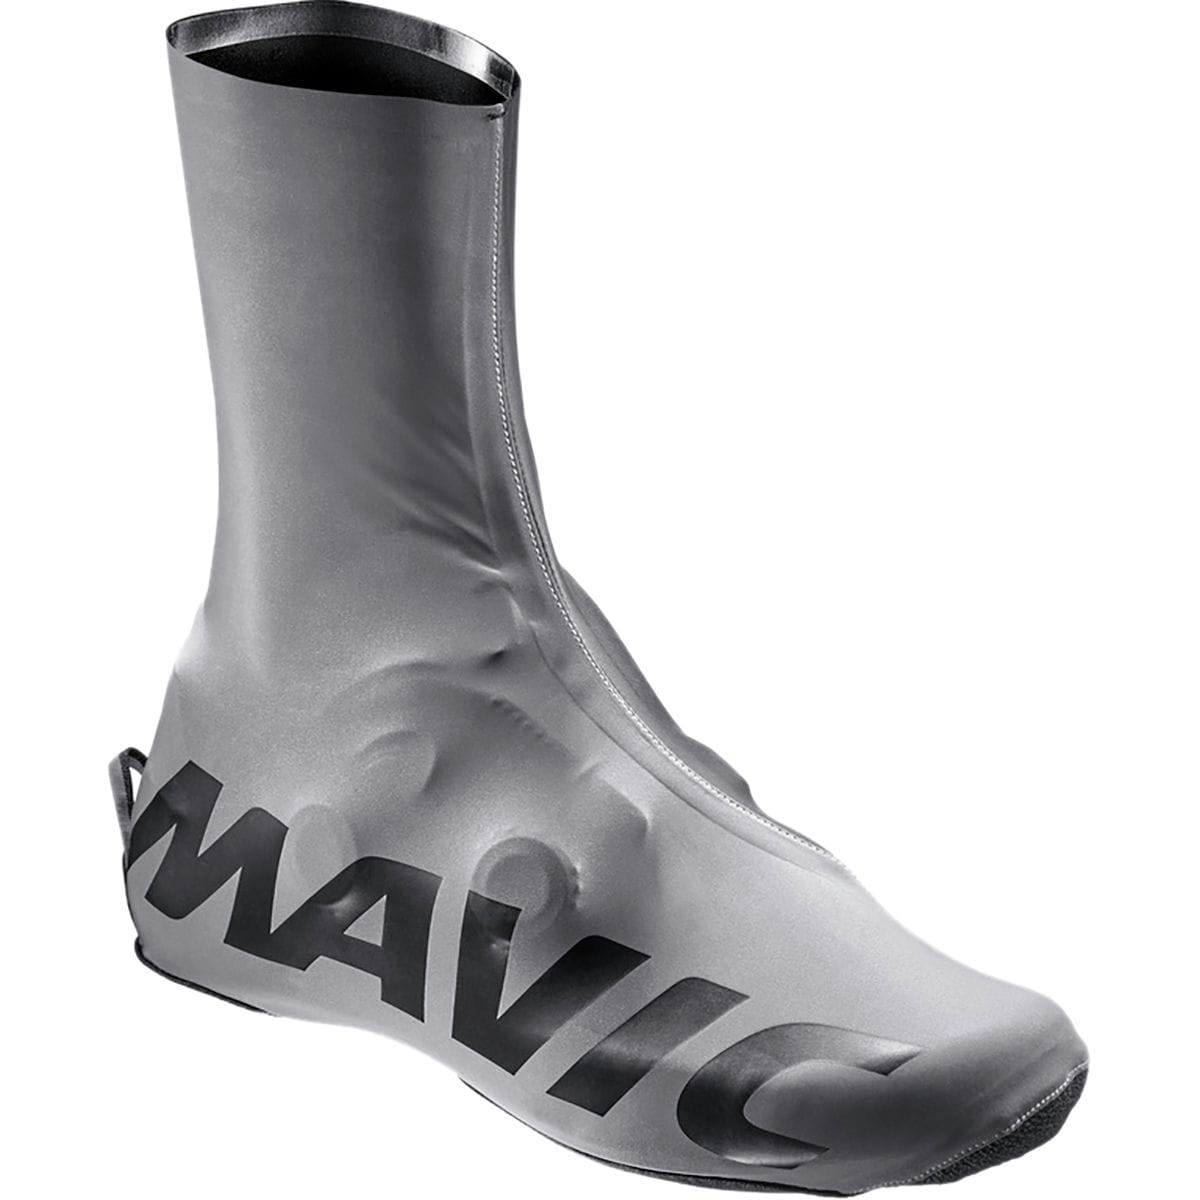 Mavic Cosmic Pro H20 Vision Shoe Cover